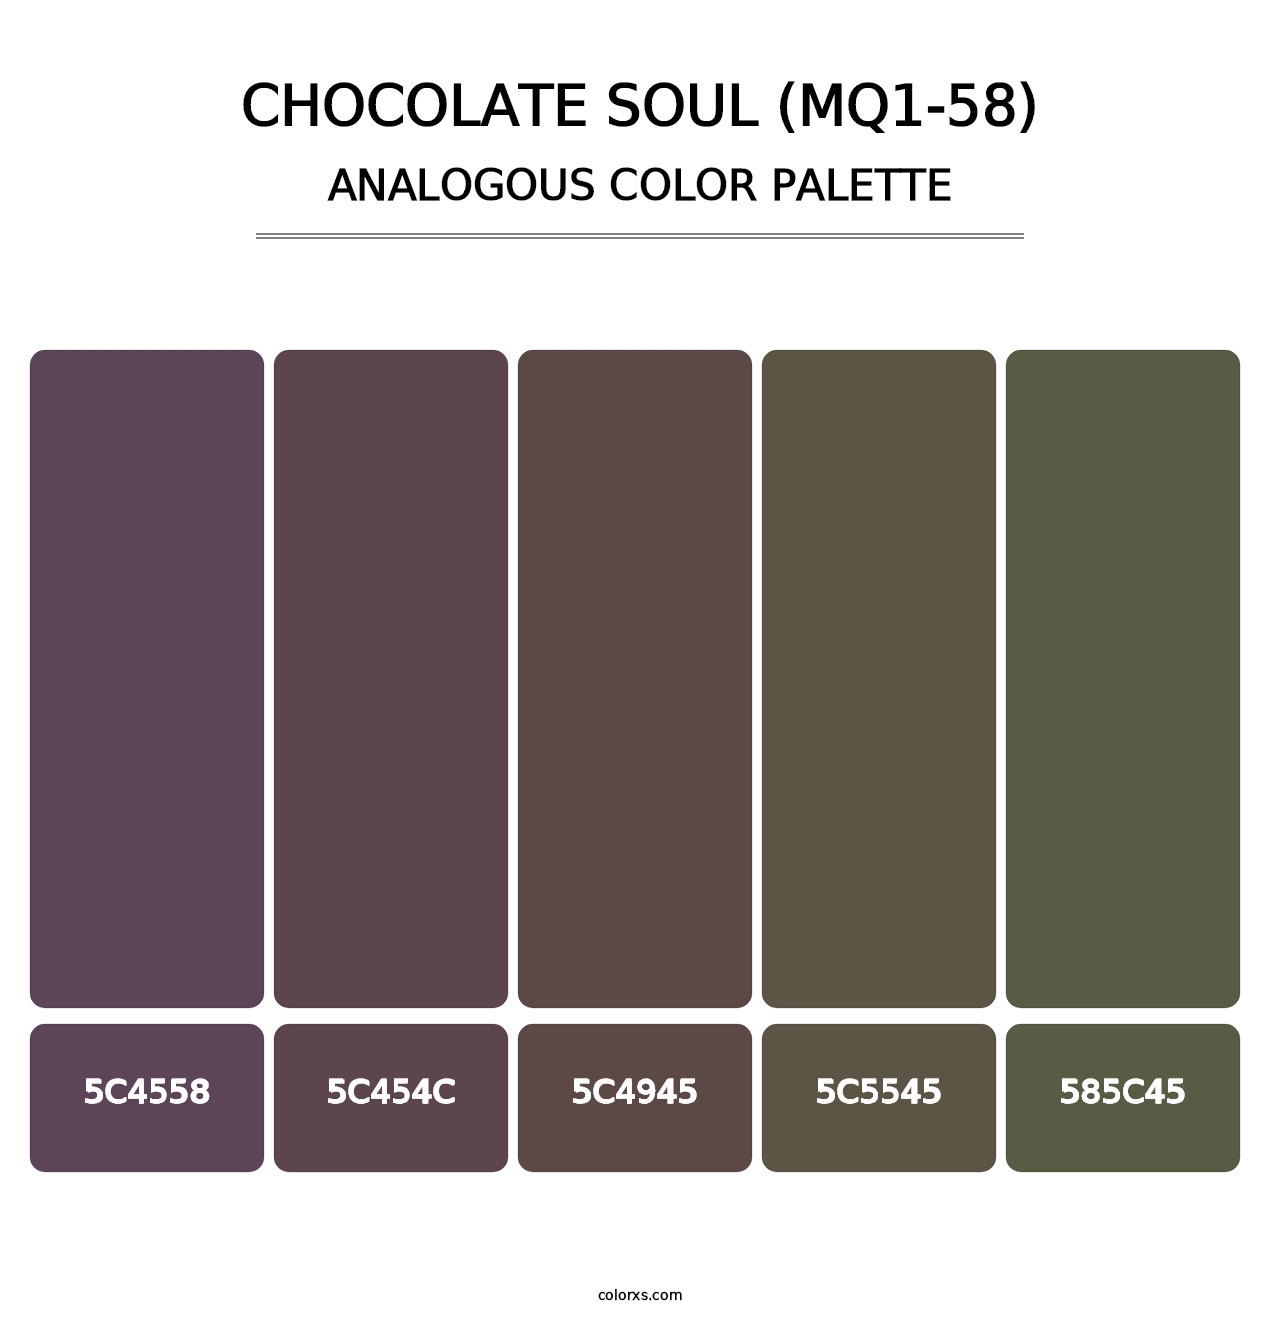 Chocolate Soul (MQ1-58) - Analogous Color Palette